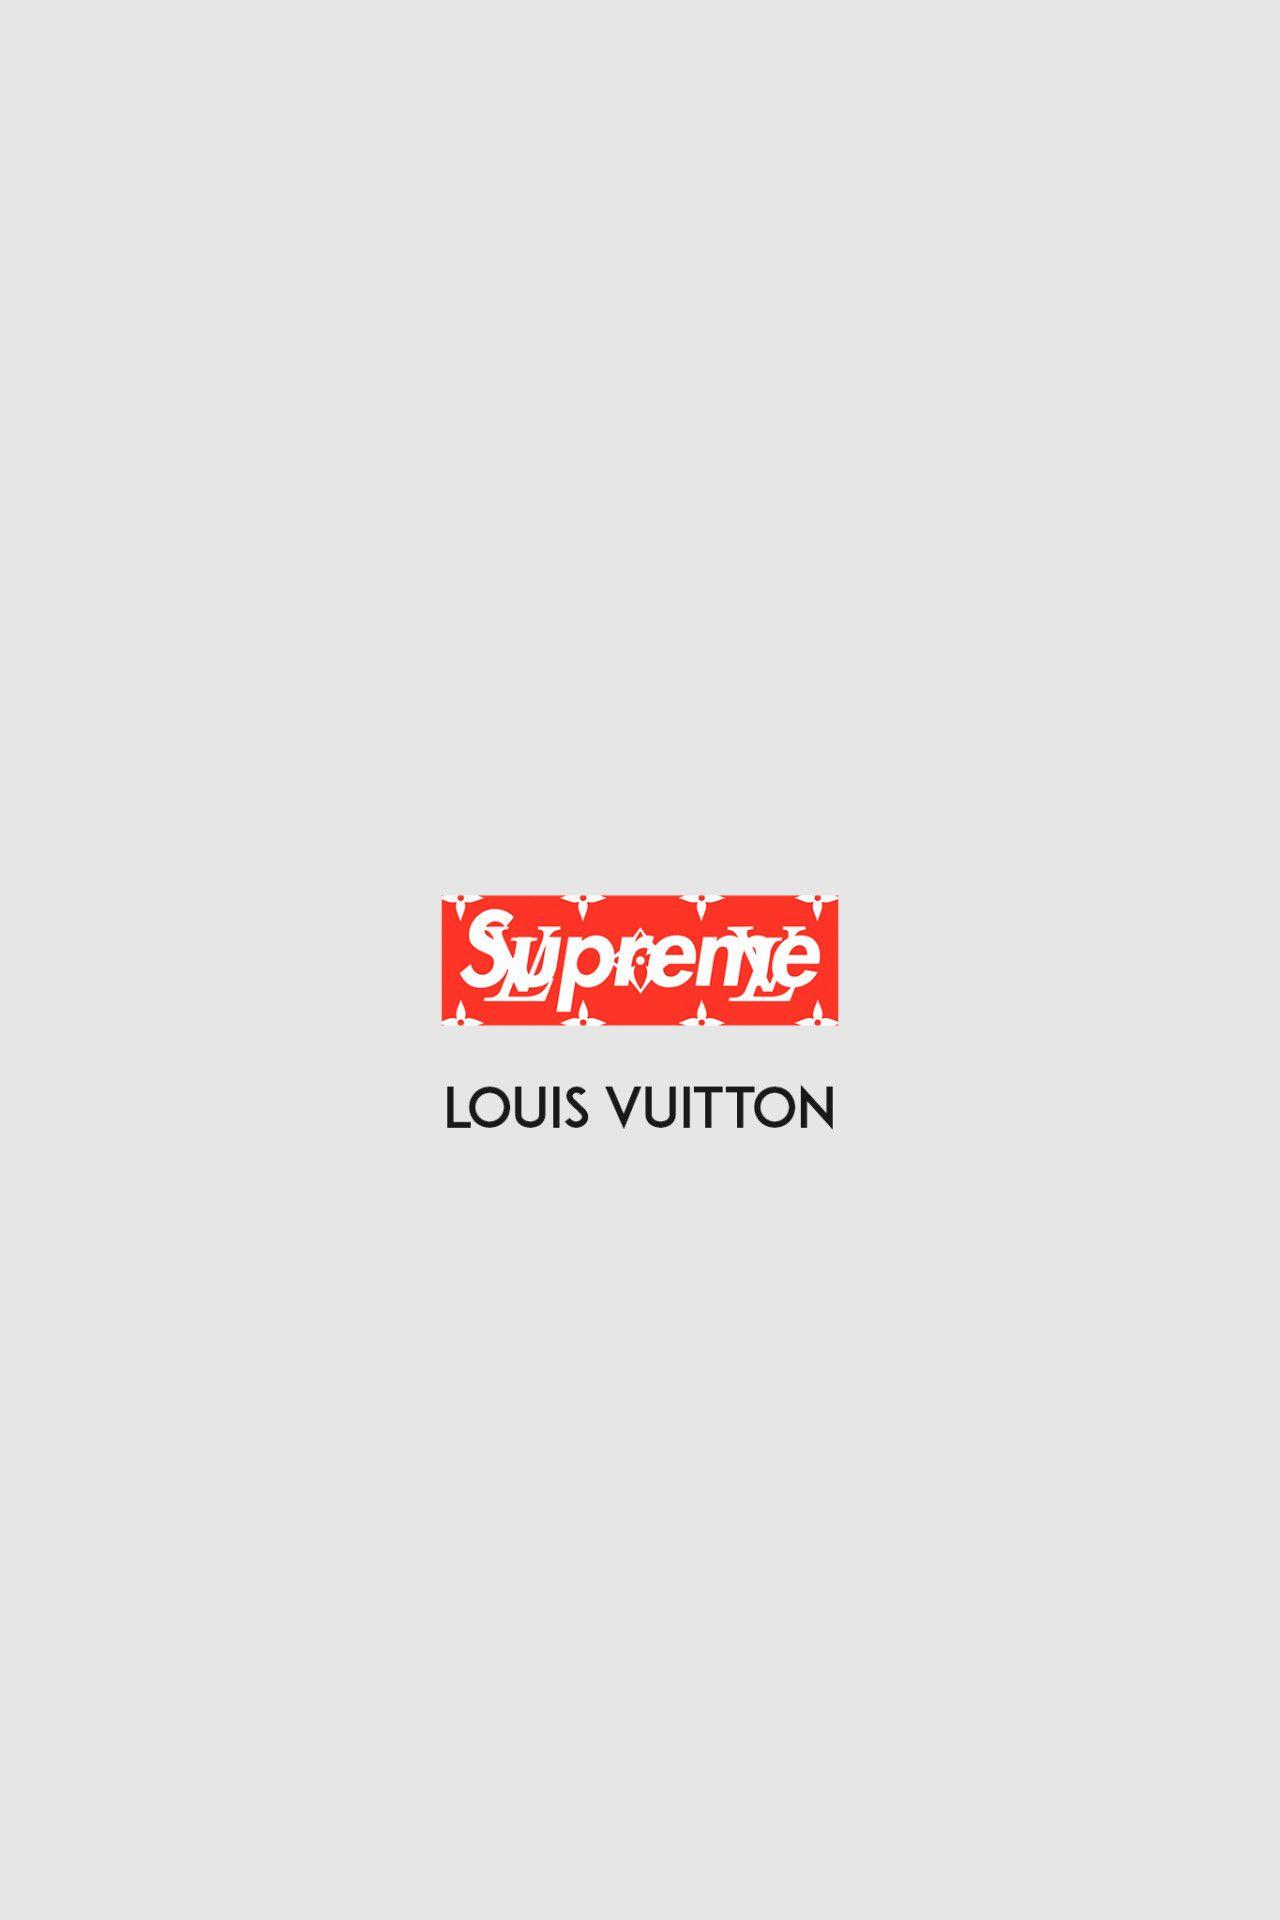 Download Camera On Superior Supreme Logo Collage Wallpaper